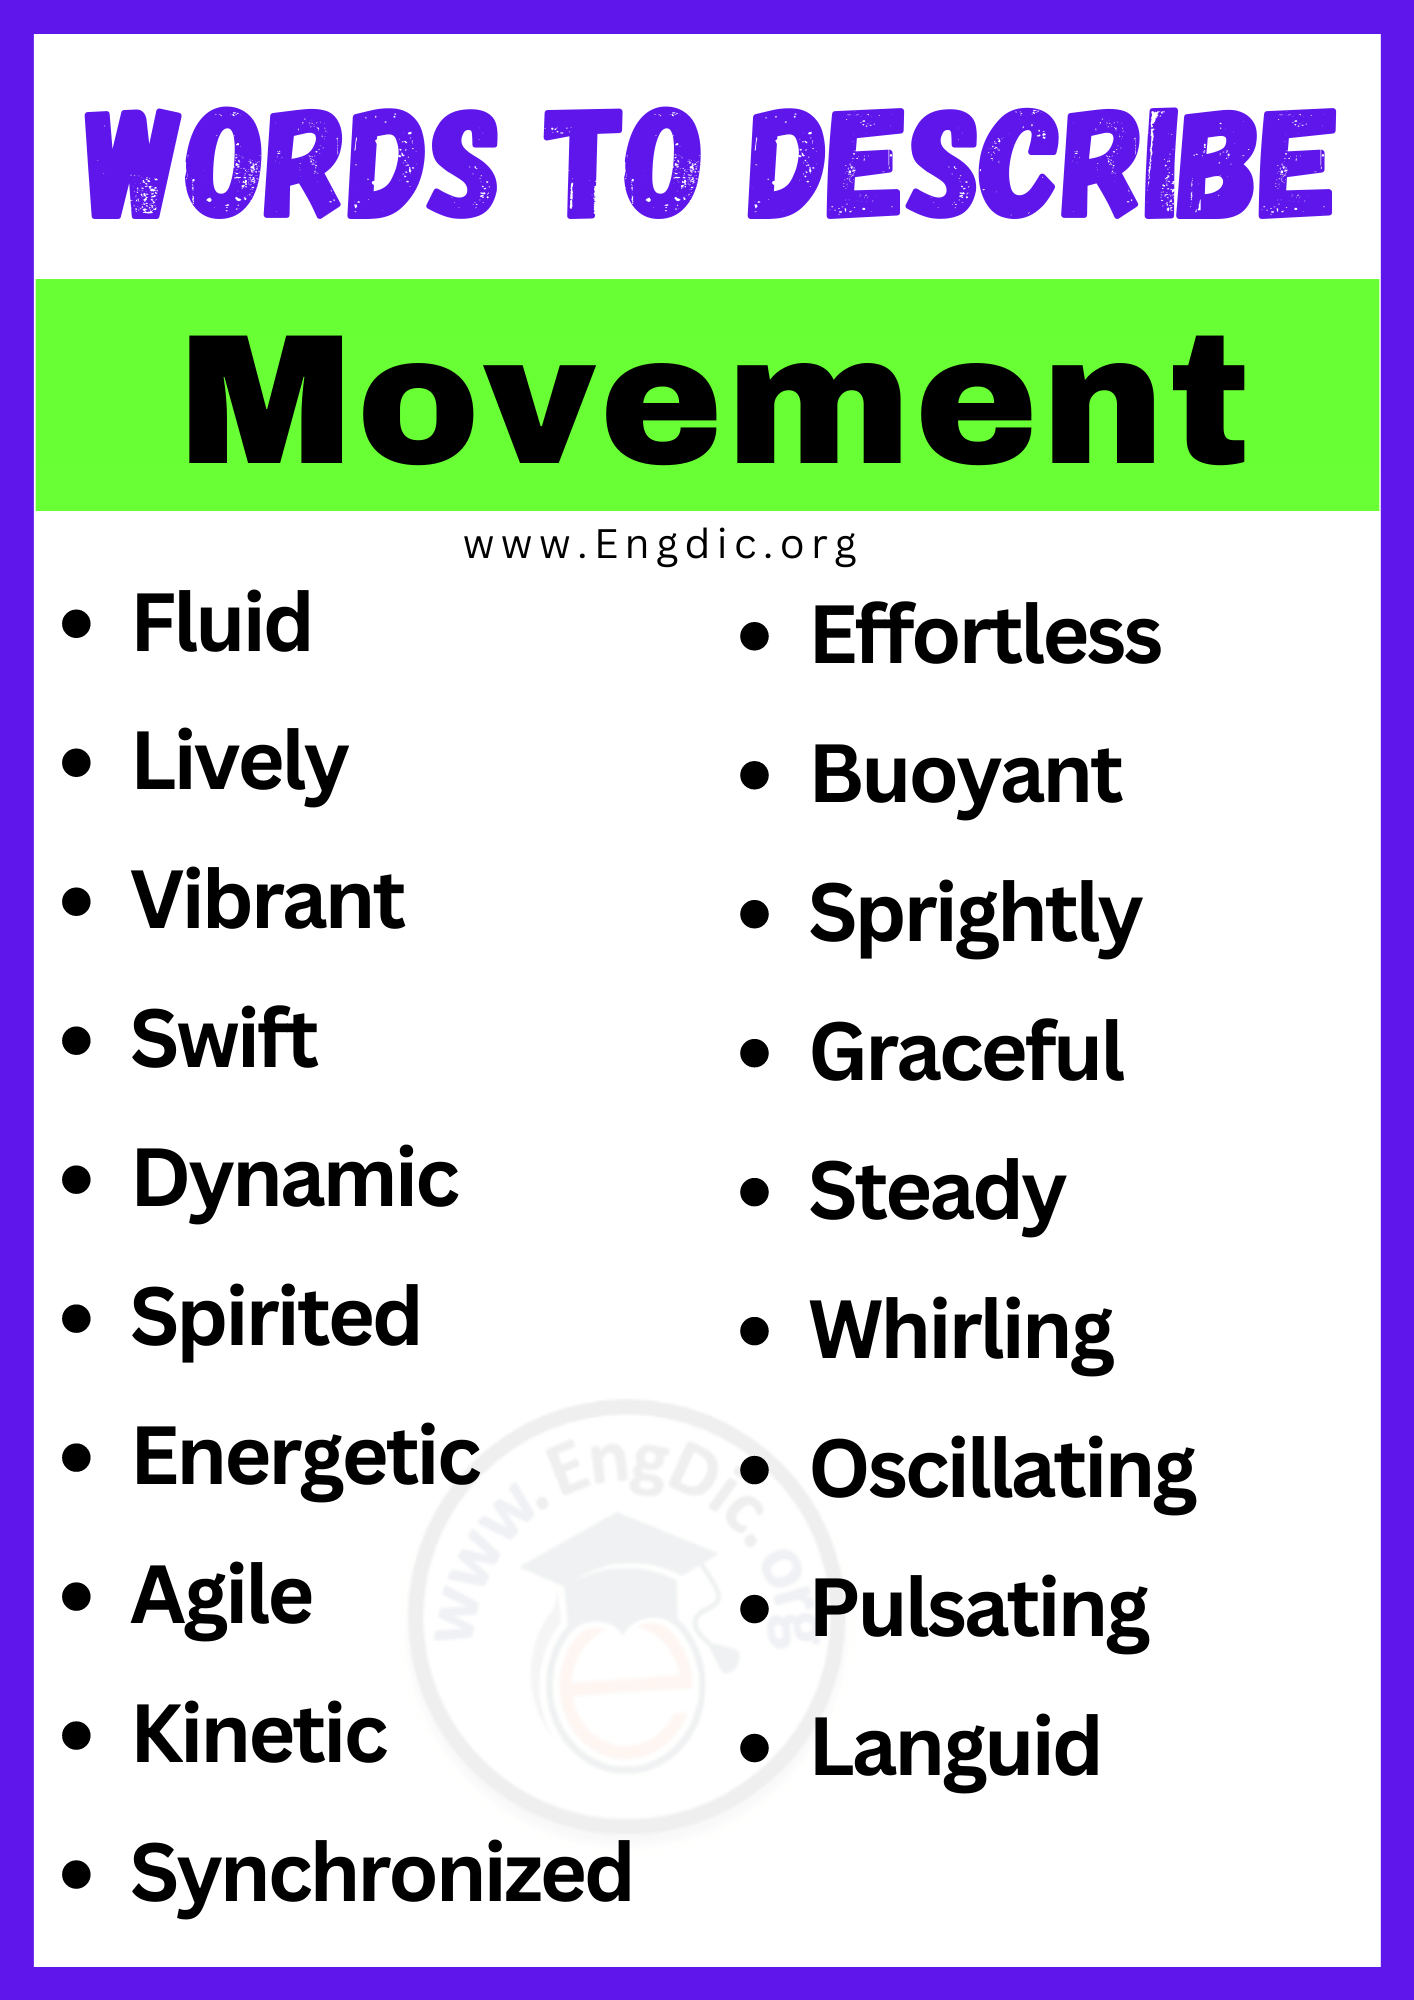 Words to Describe Movement